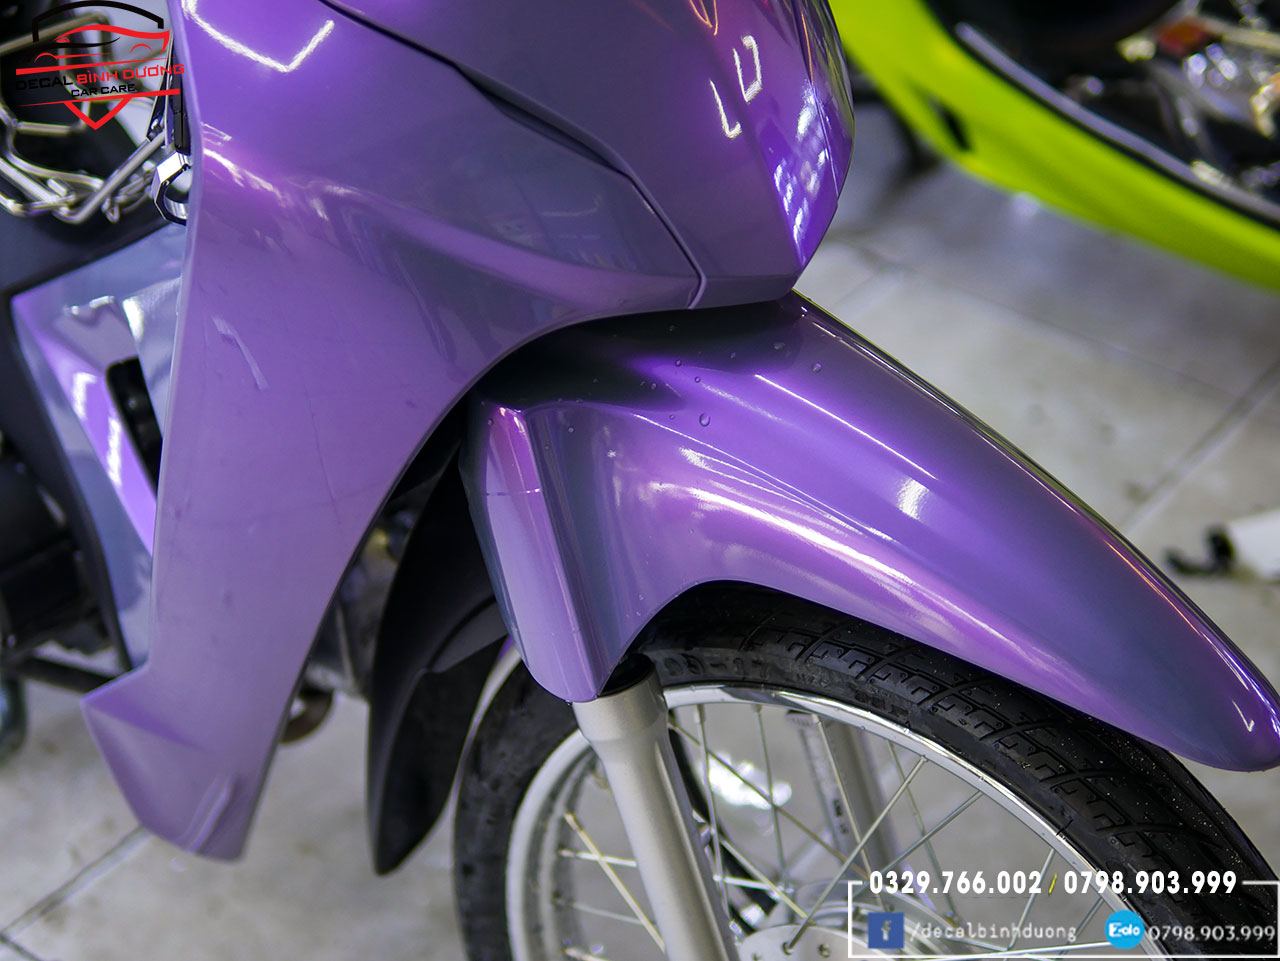 Honda Wave 110cc xanh tím than  Cửa hàng Xe máy Khá Khánh  Facebook